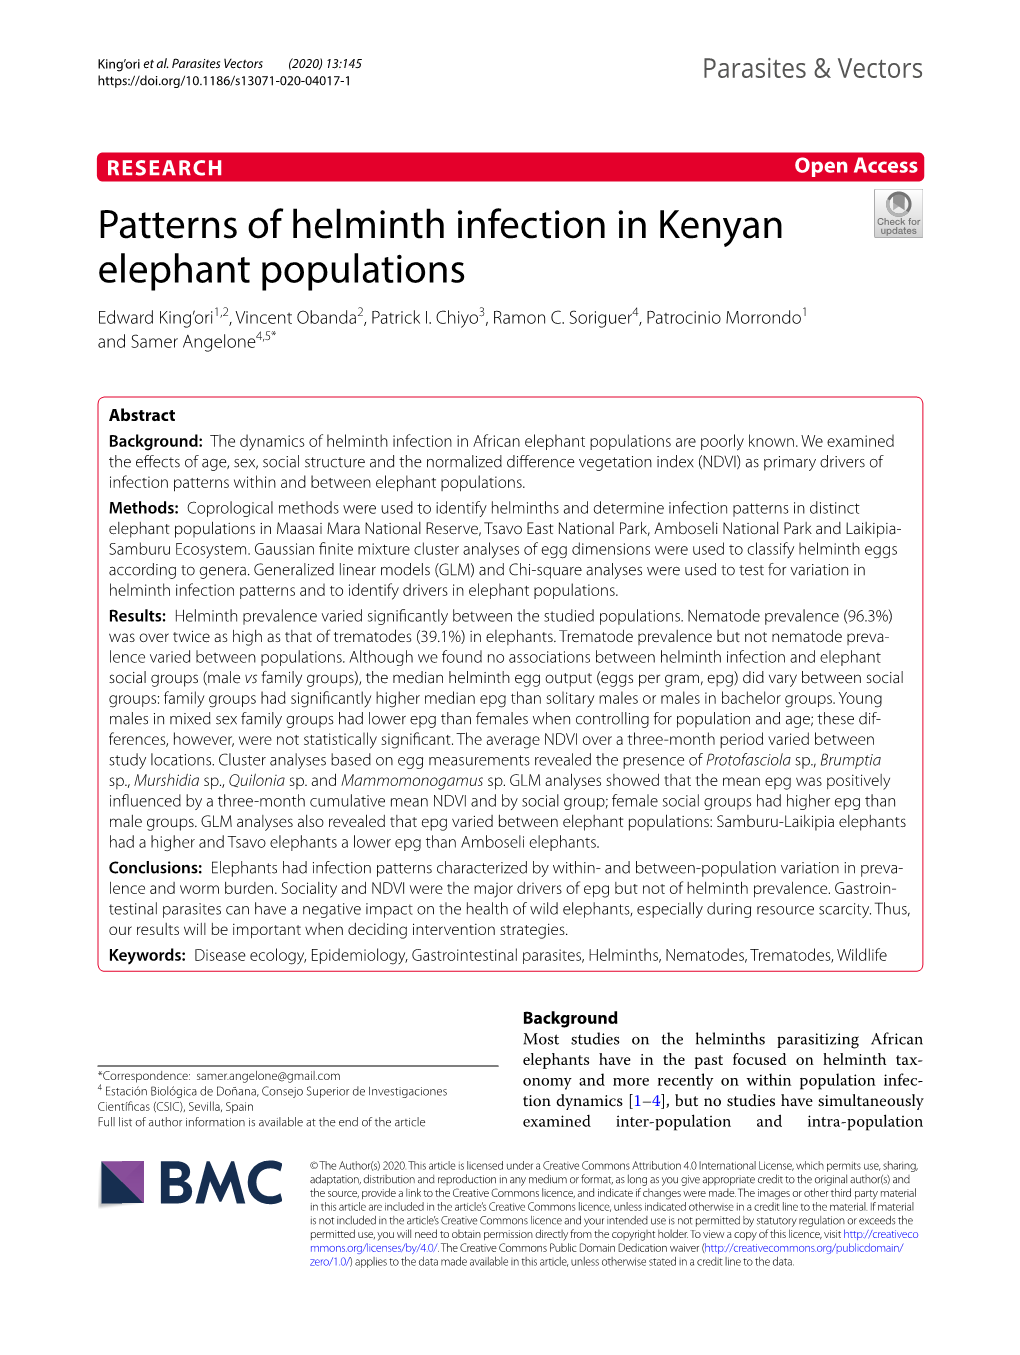 Patterns of Helminth Infection in Kenyan Elephant Populations Edward King’Ori1,2, Vincent Obanda2, Patrick I